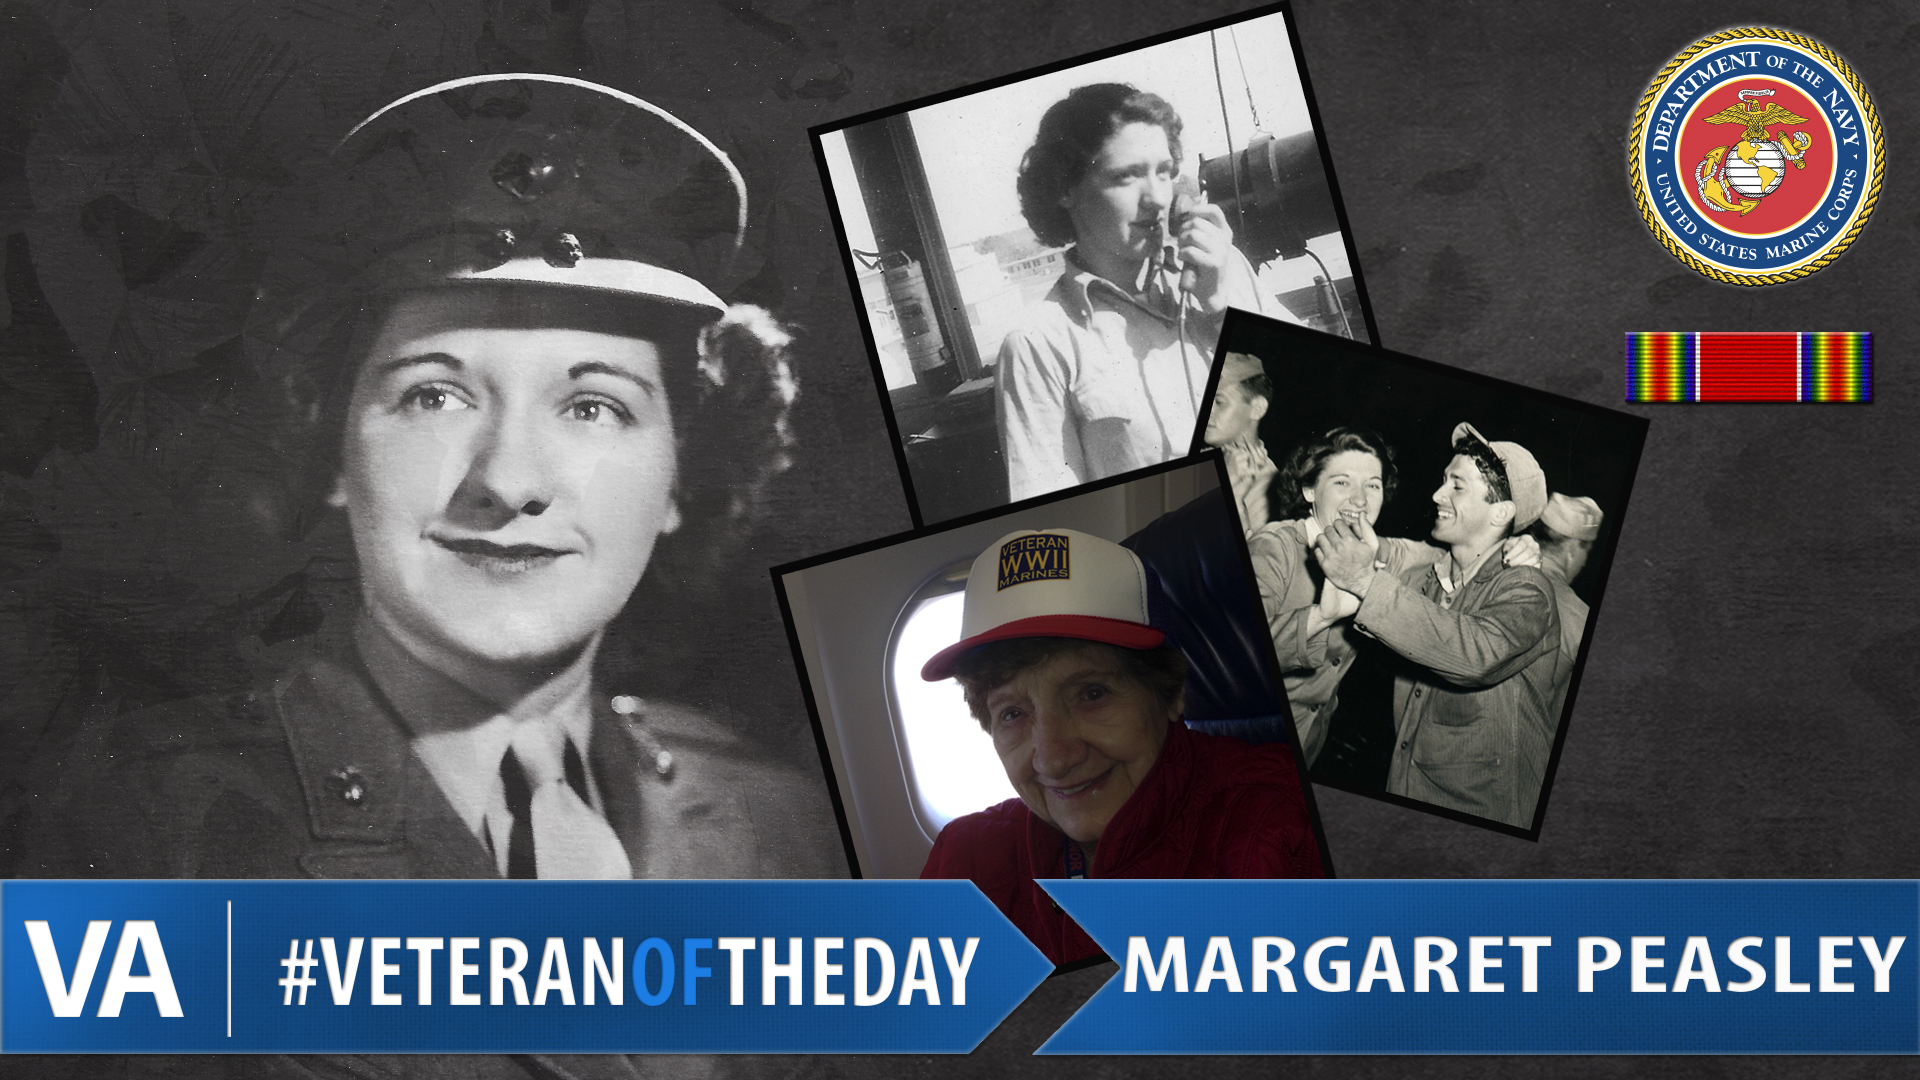 Veteran of the Day Margaret Peasley